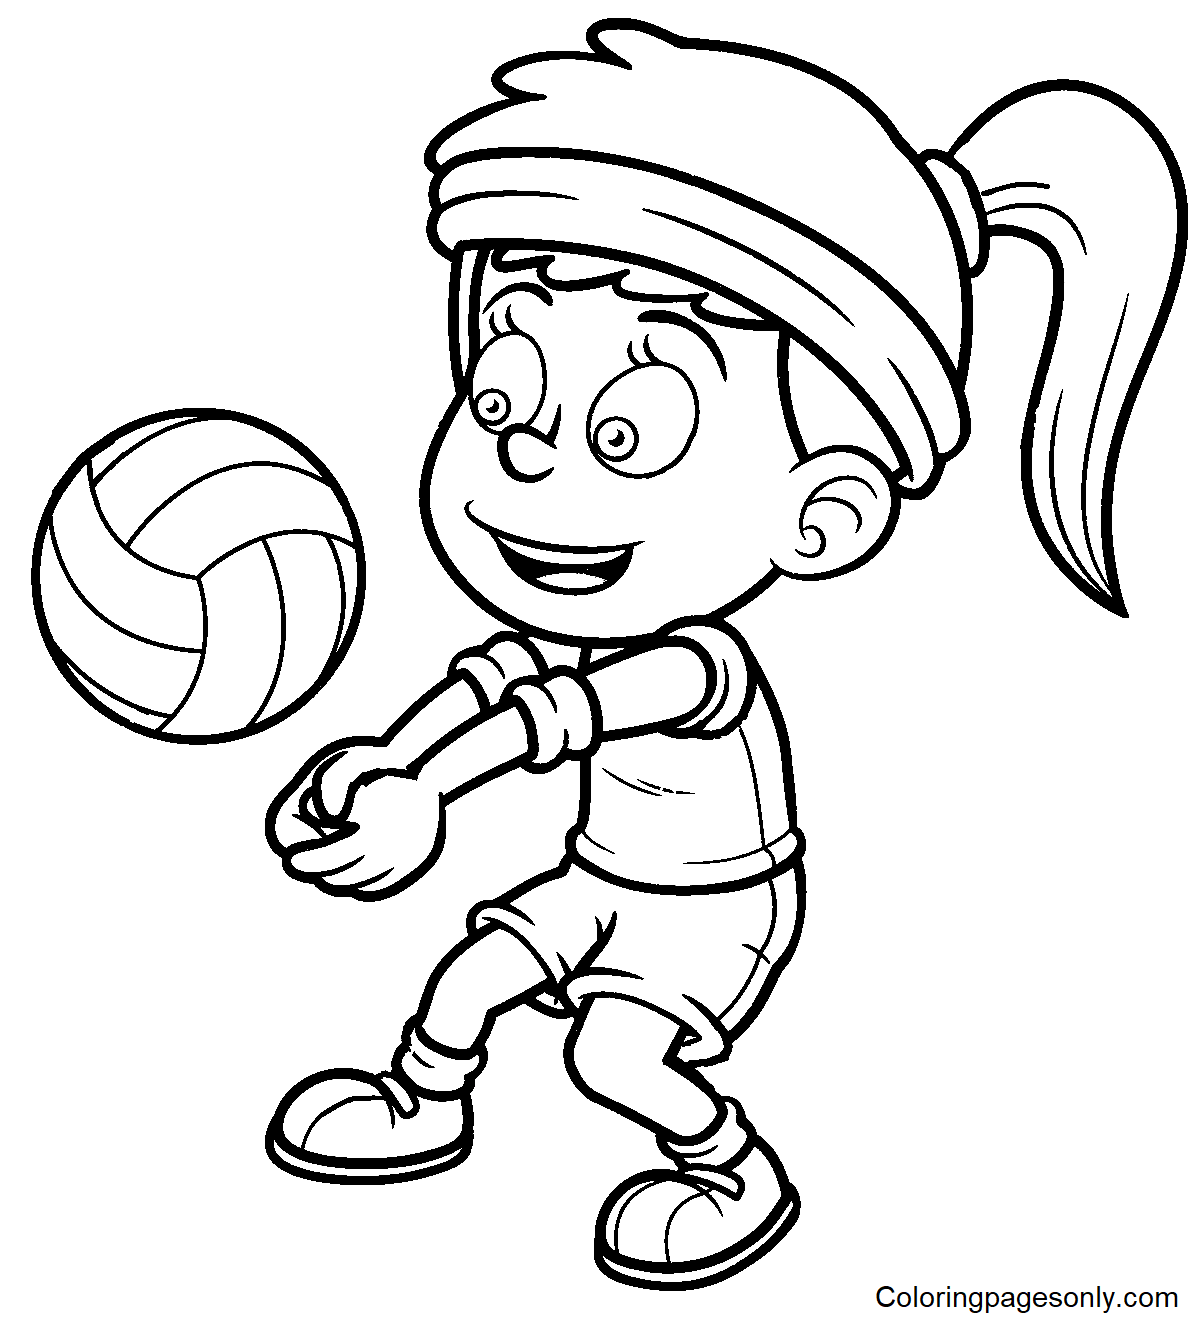 Volley-ball de dessin animé du volley-ball